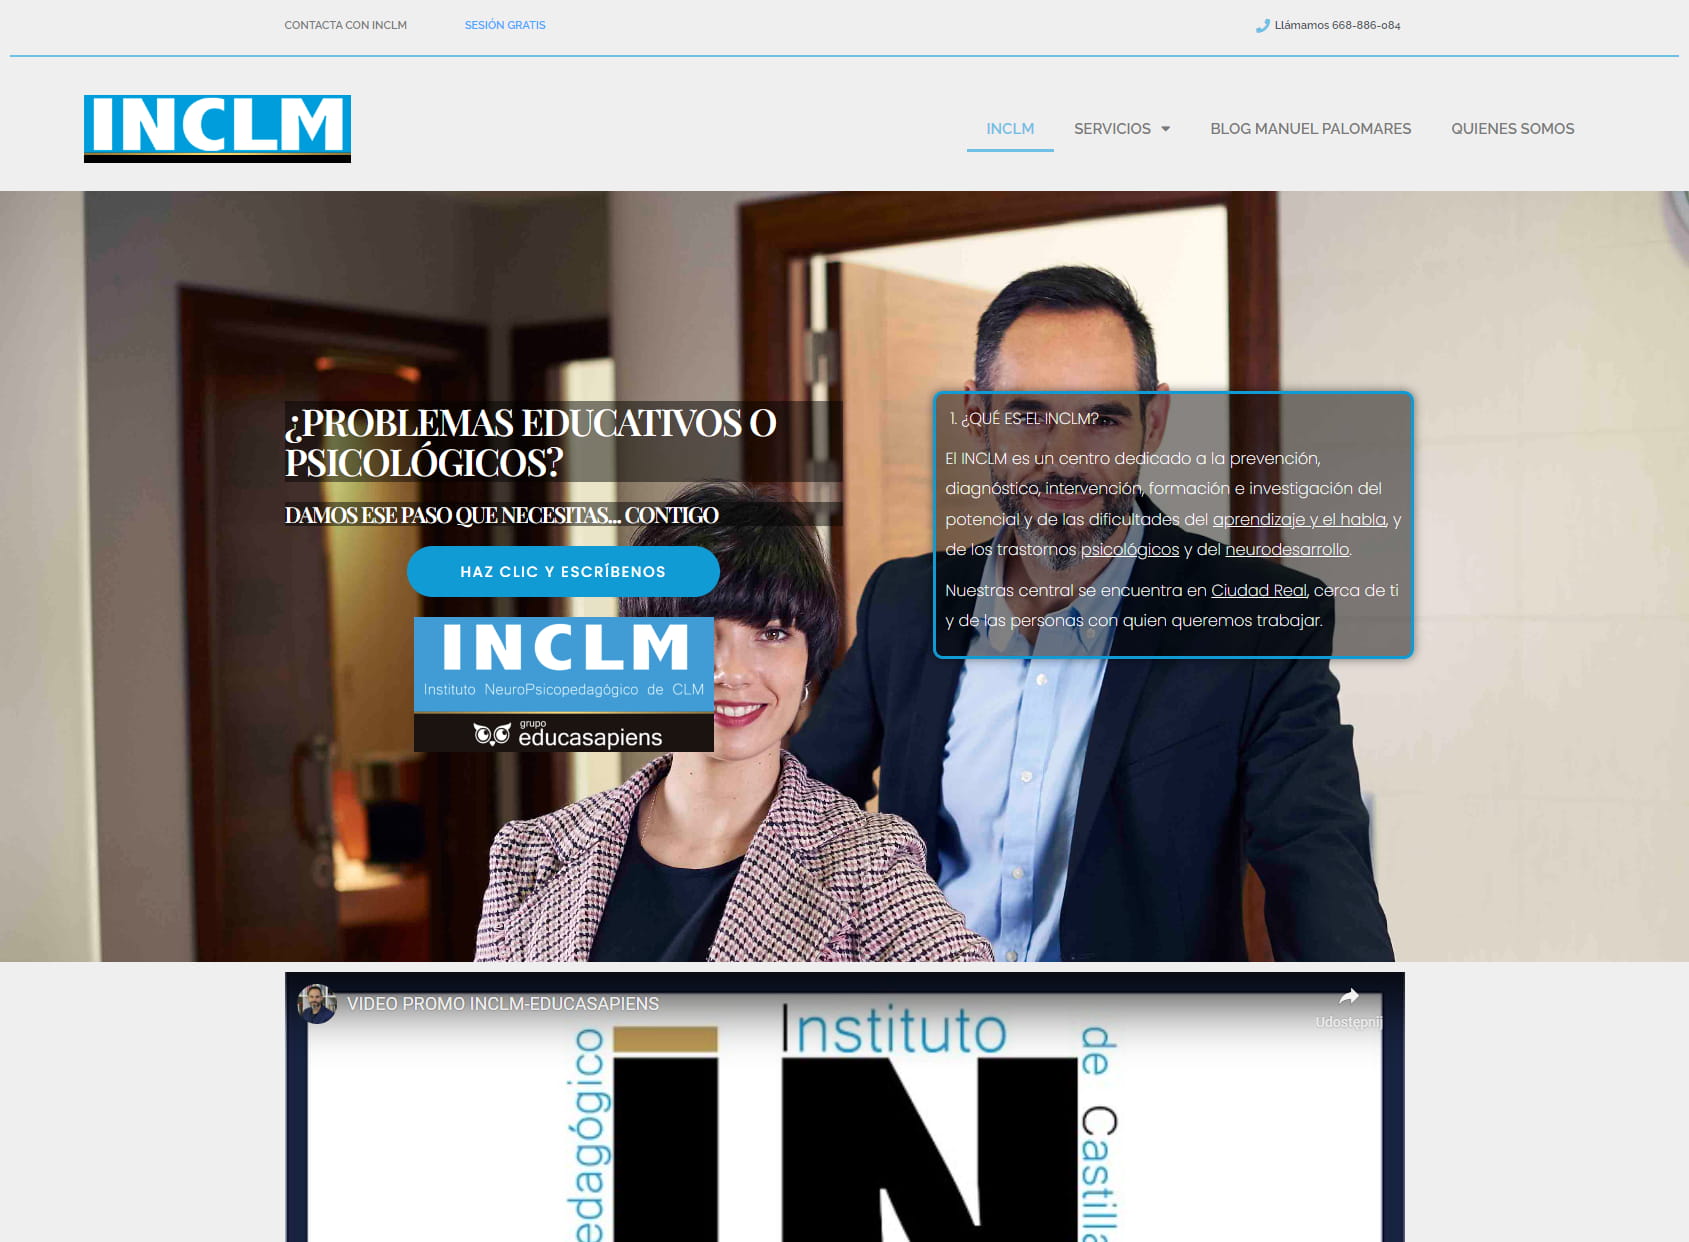 INCLM - Instituto Neuropsicopedagógico de Castilla-La Mancha